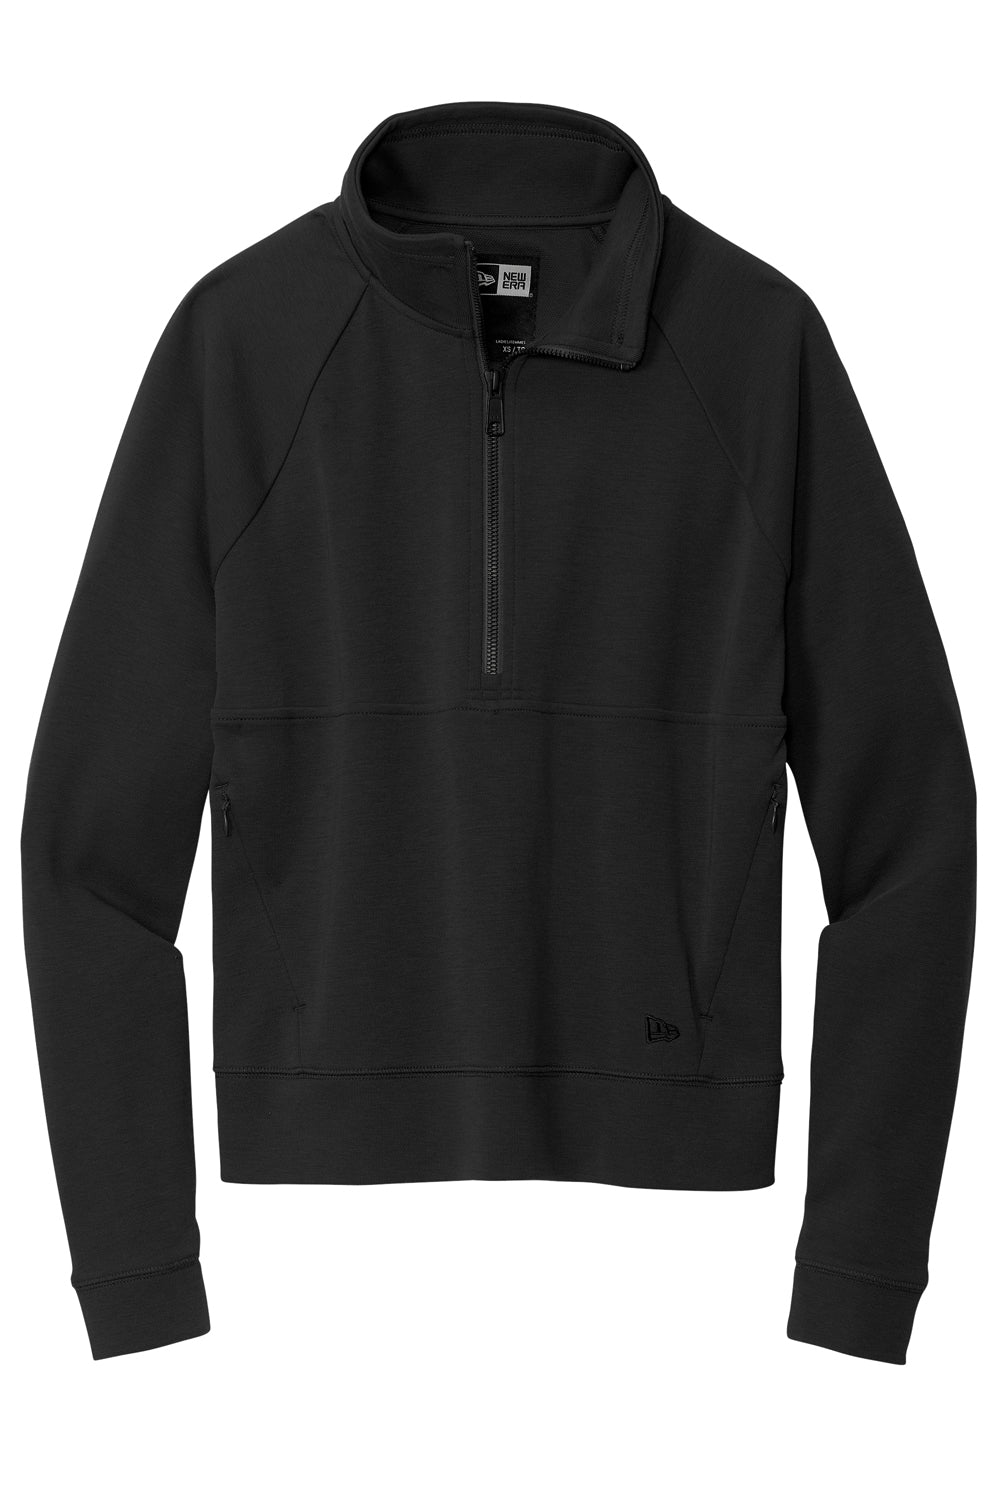 New Era LNEA541 Mens STS 1/4 Zip Sweatshirt Black Flat Front